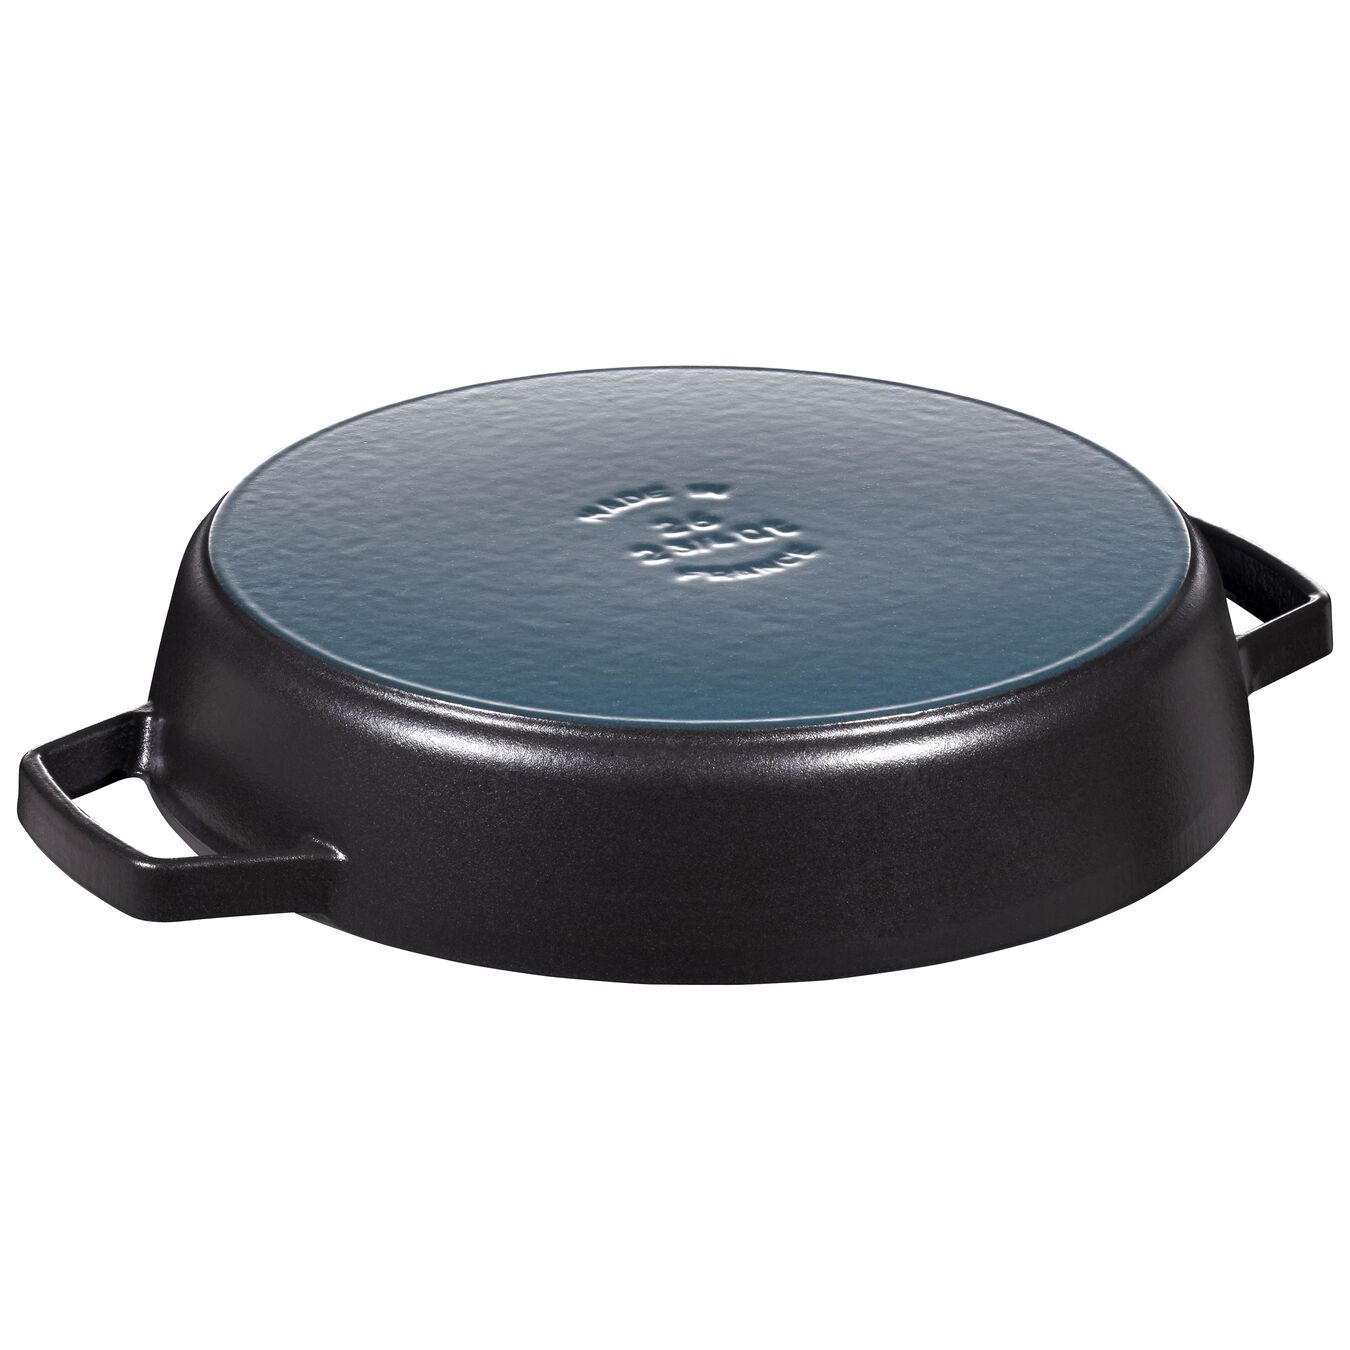 26 cm / 10 inch cast iron Frying pan, black,,large 2